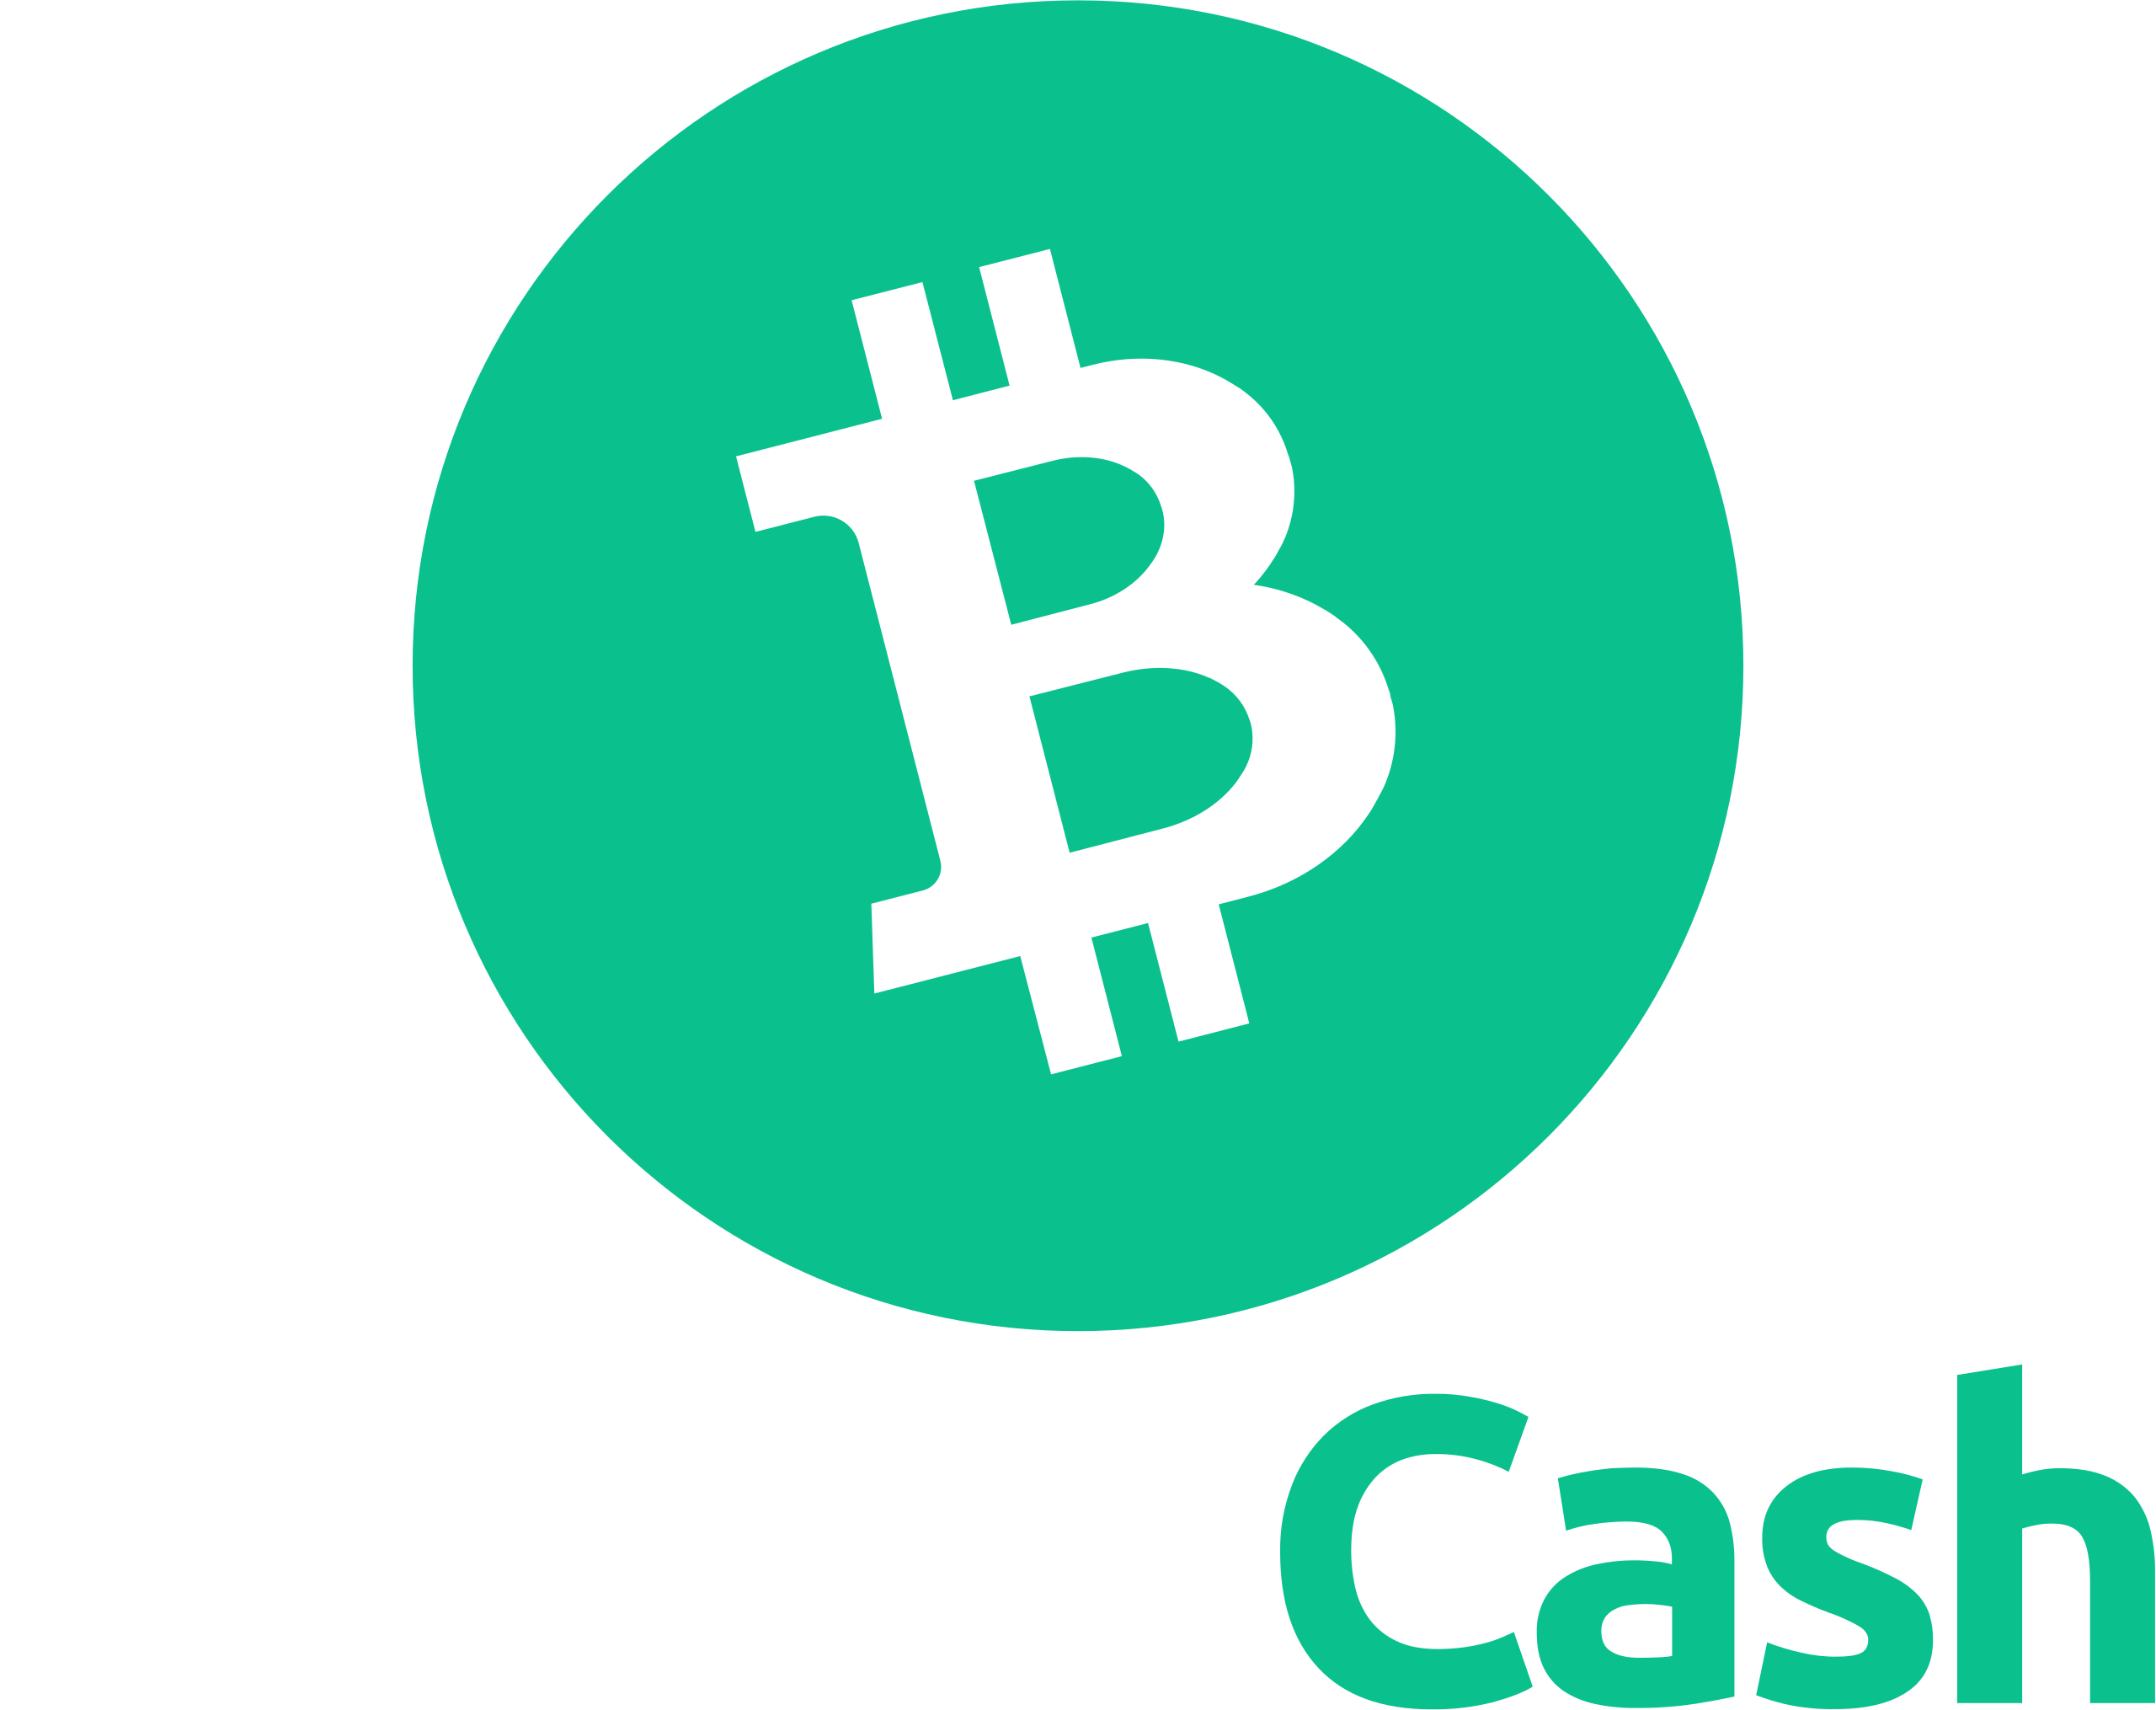 Bitcoin Cash Resources - Bitcoin BCH